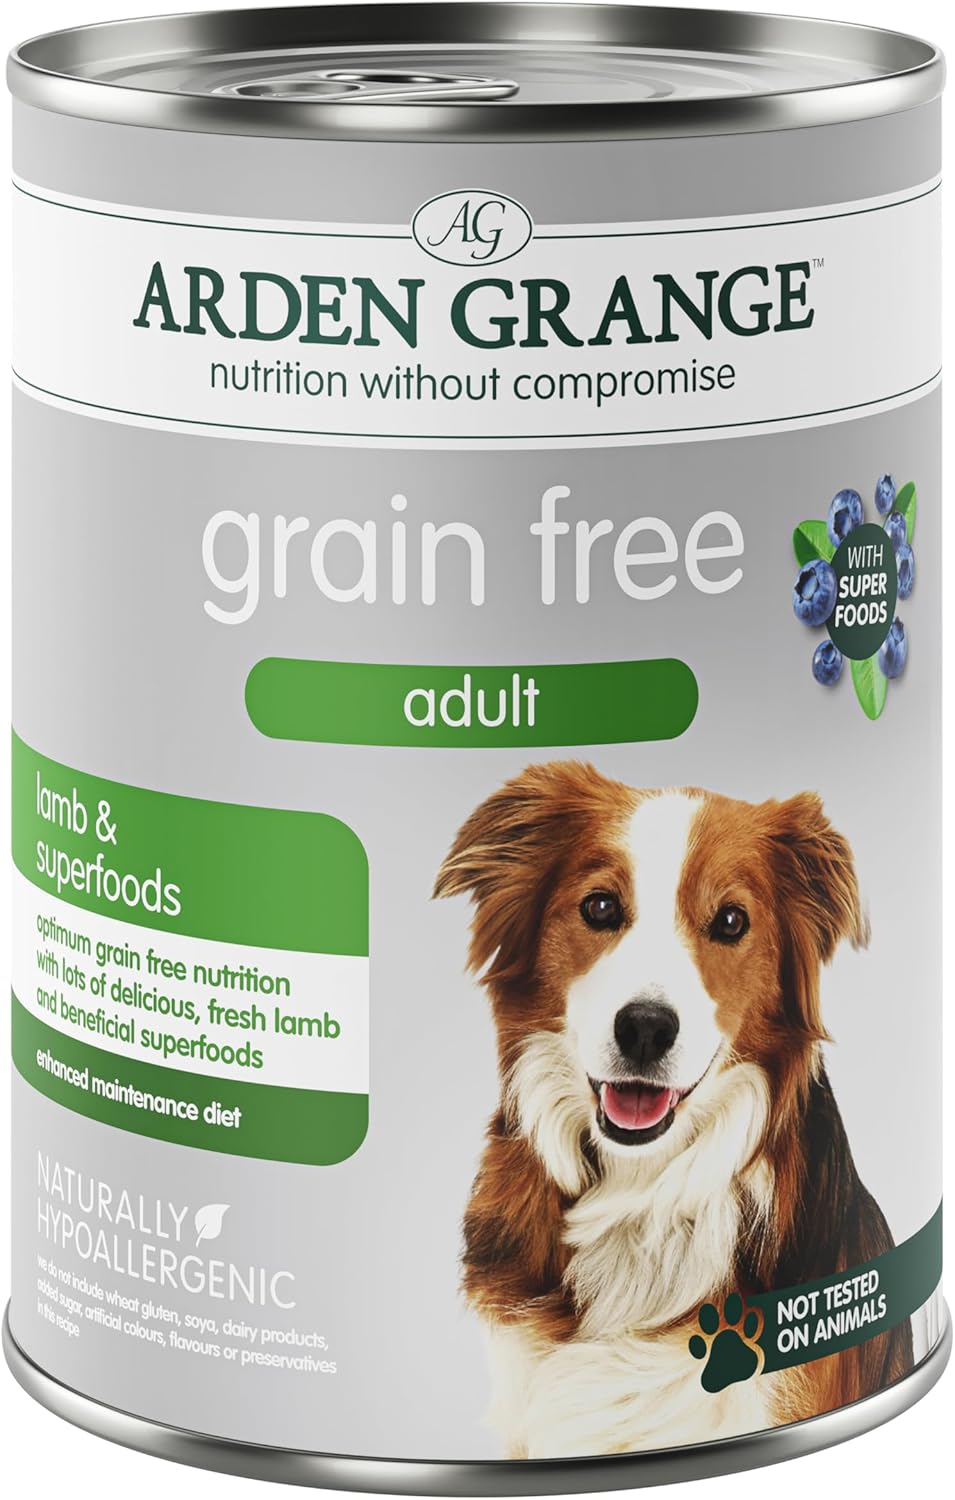 Arden Grange grain free adult lamb & superfoods 6 x 395g